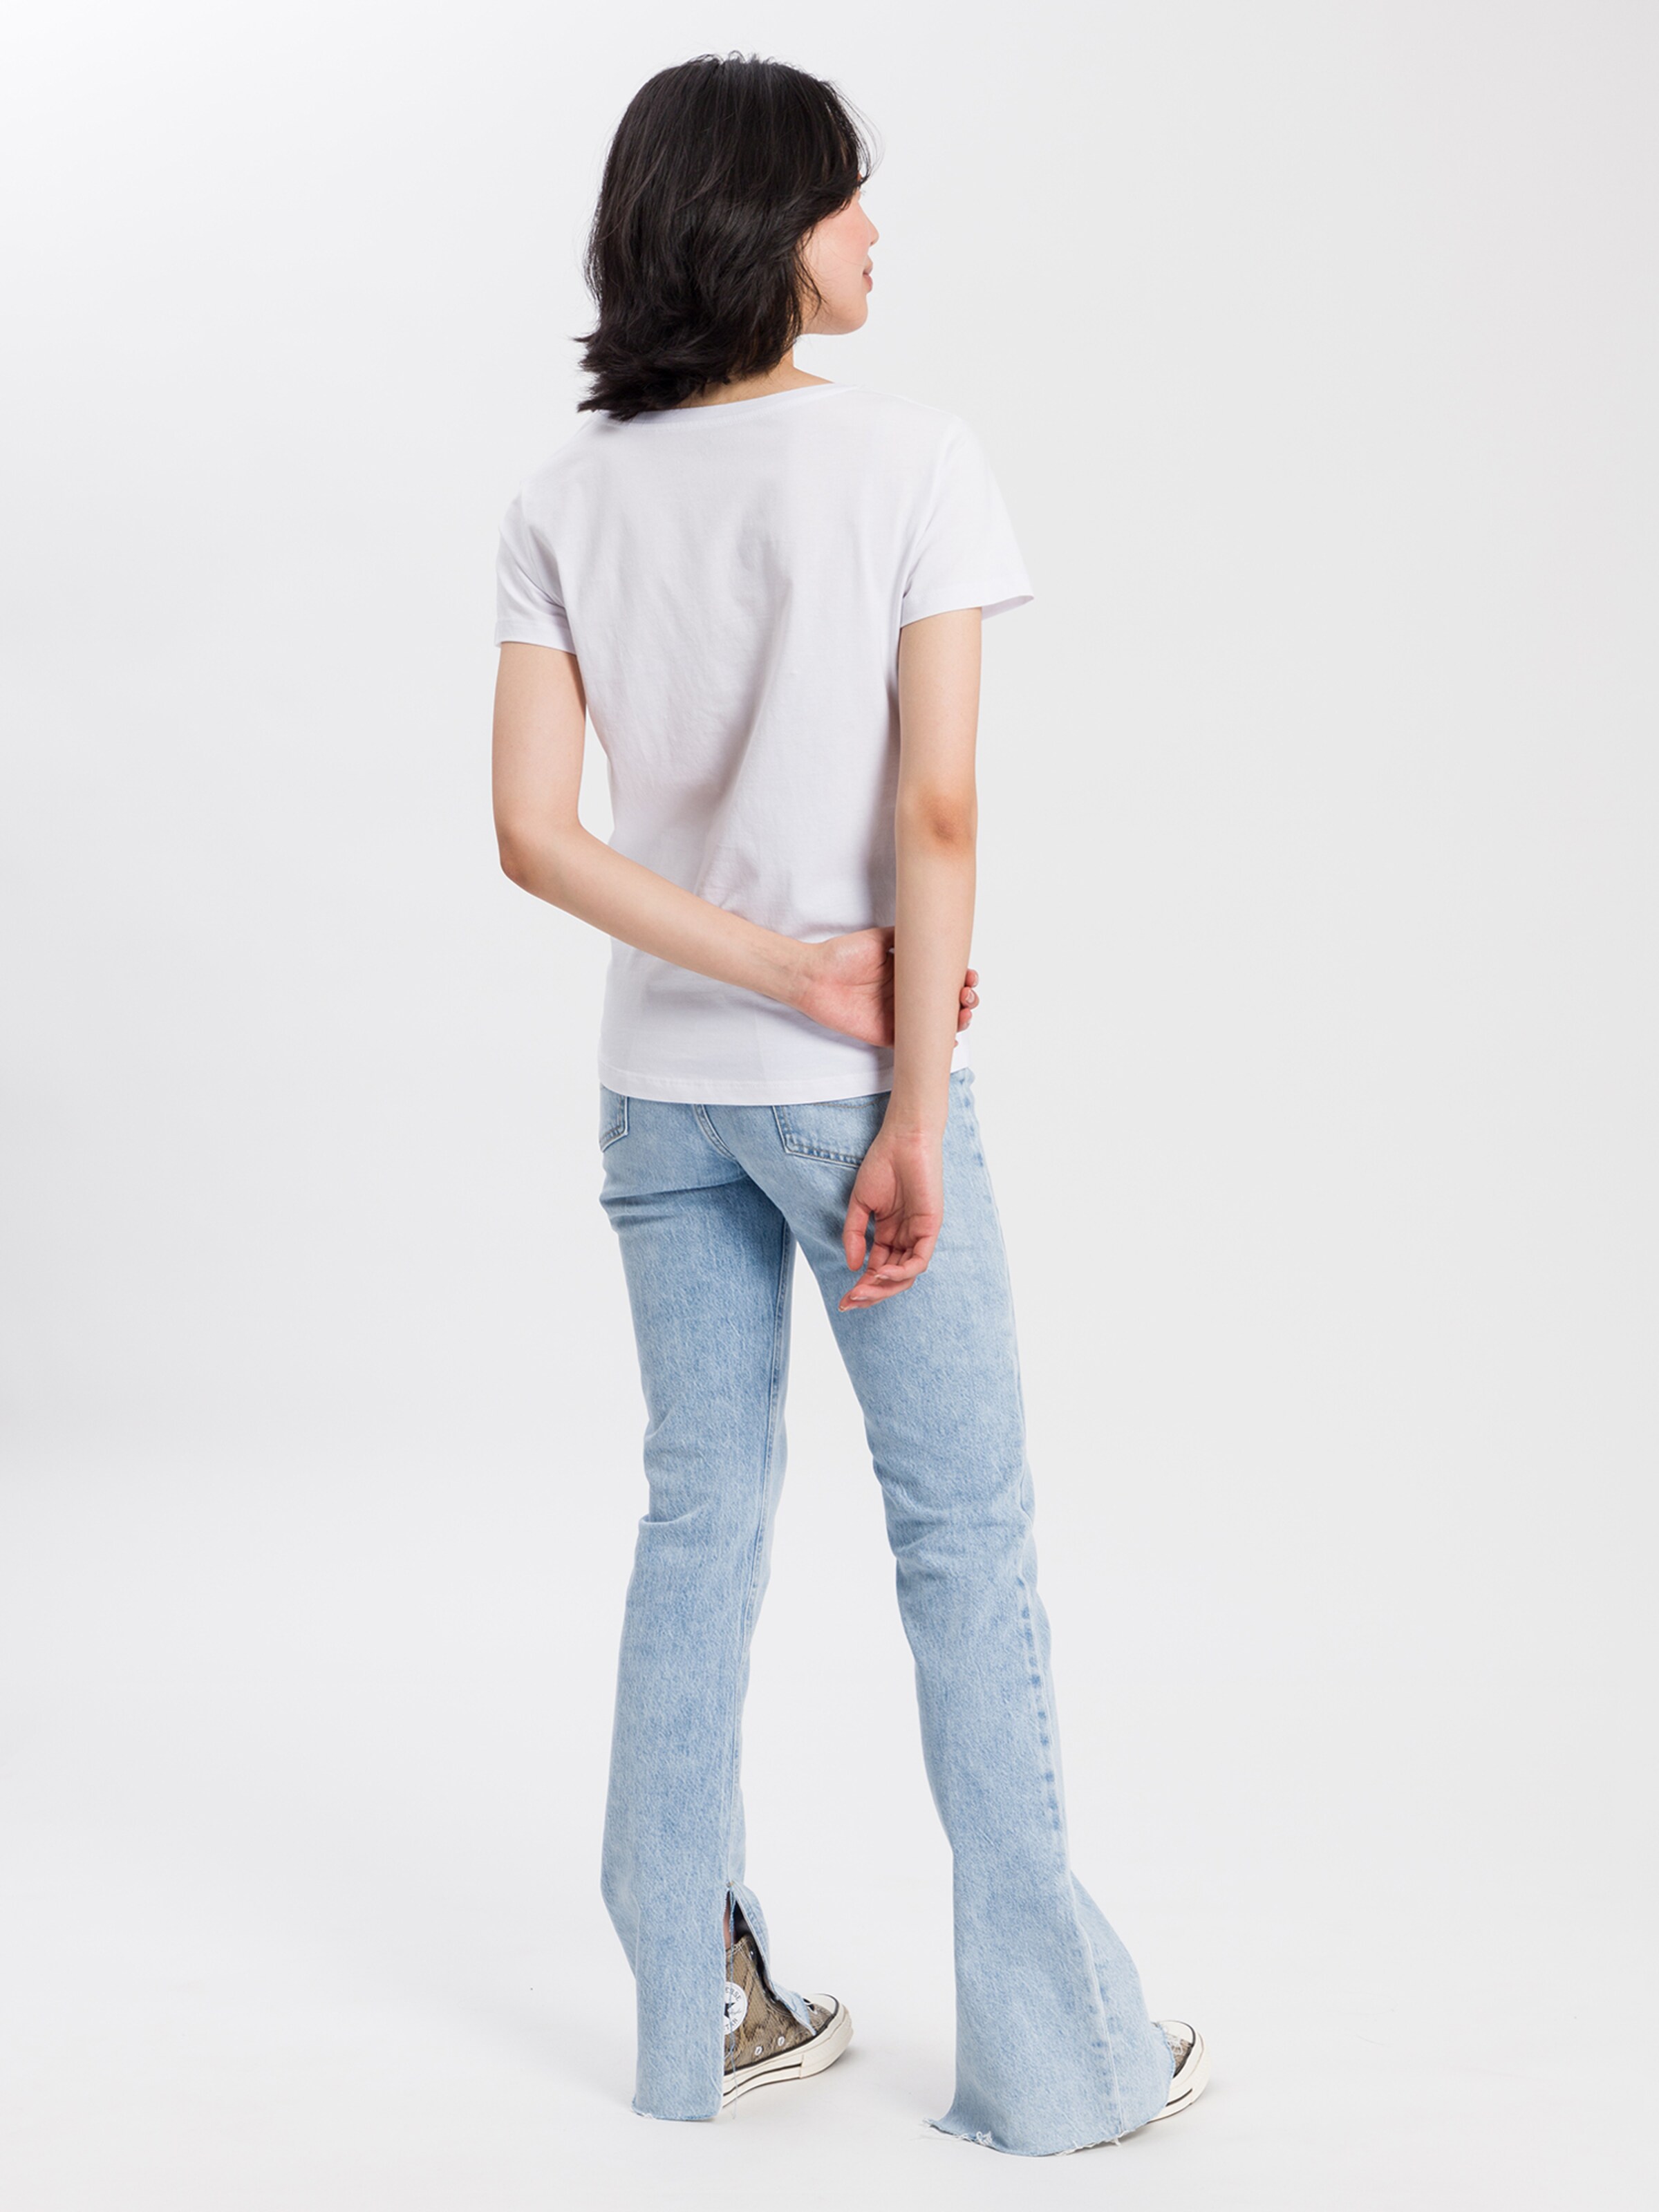 Frauen Shirts & Tops Cross Jeans T-Shirt in Weiß - LE07001